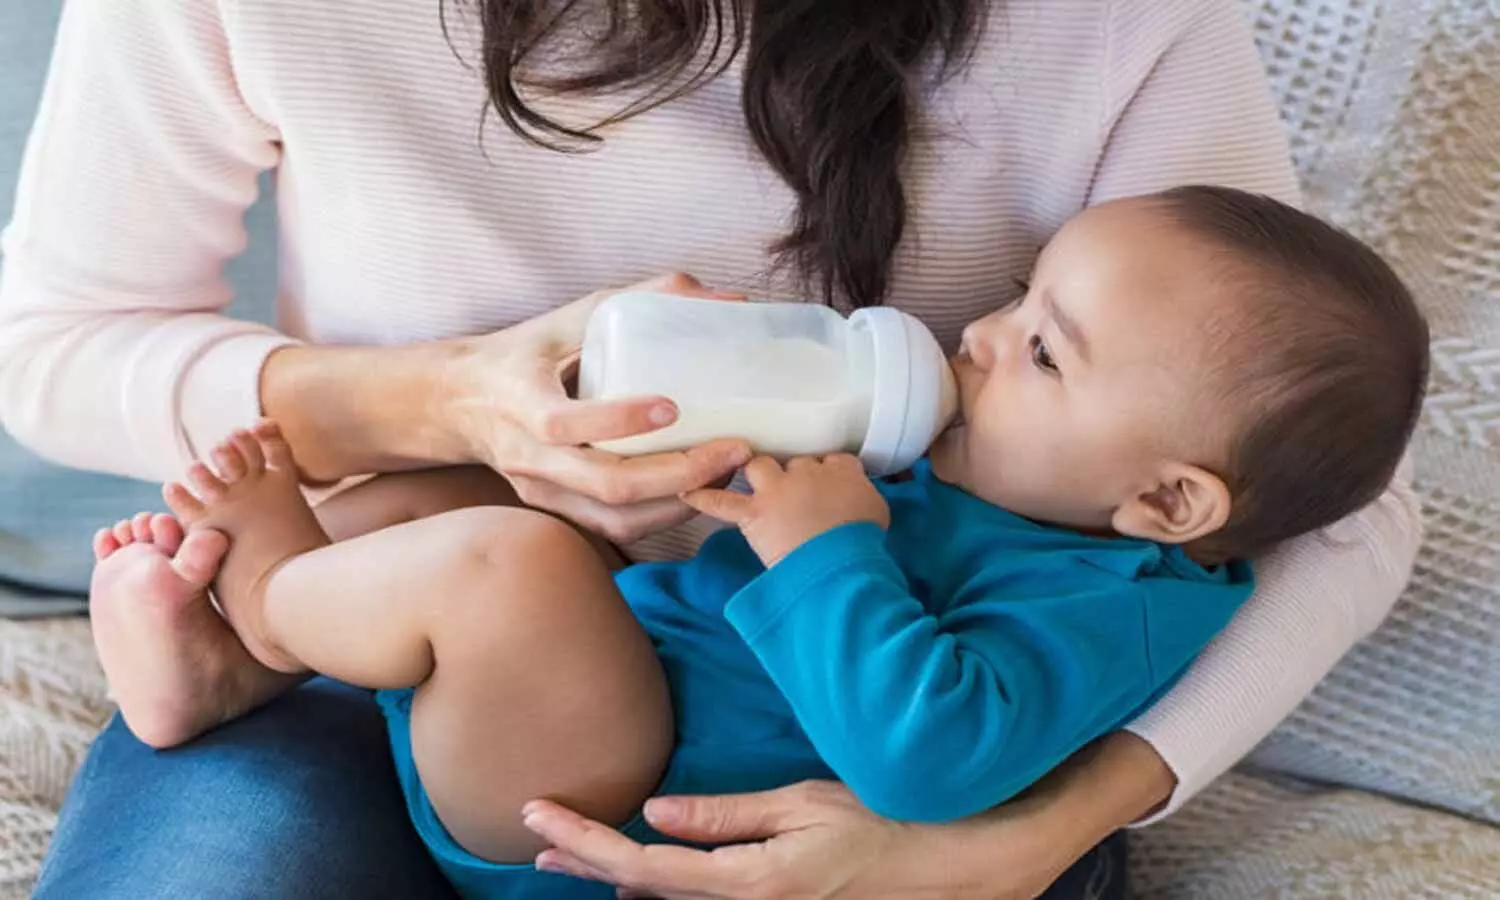 Current milk allergy guidelines may overdiagnose milk allergy in children